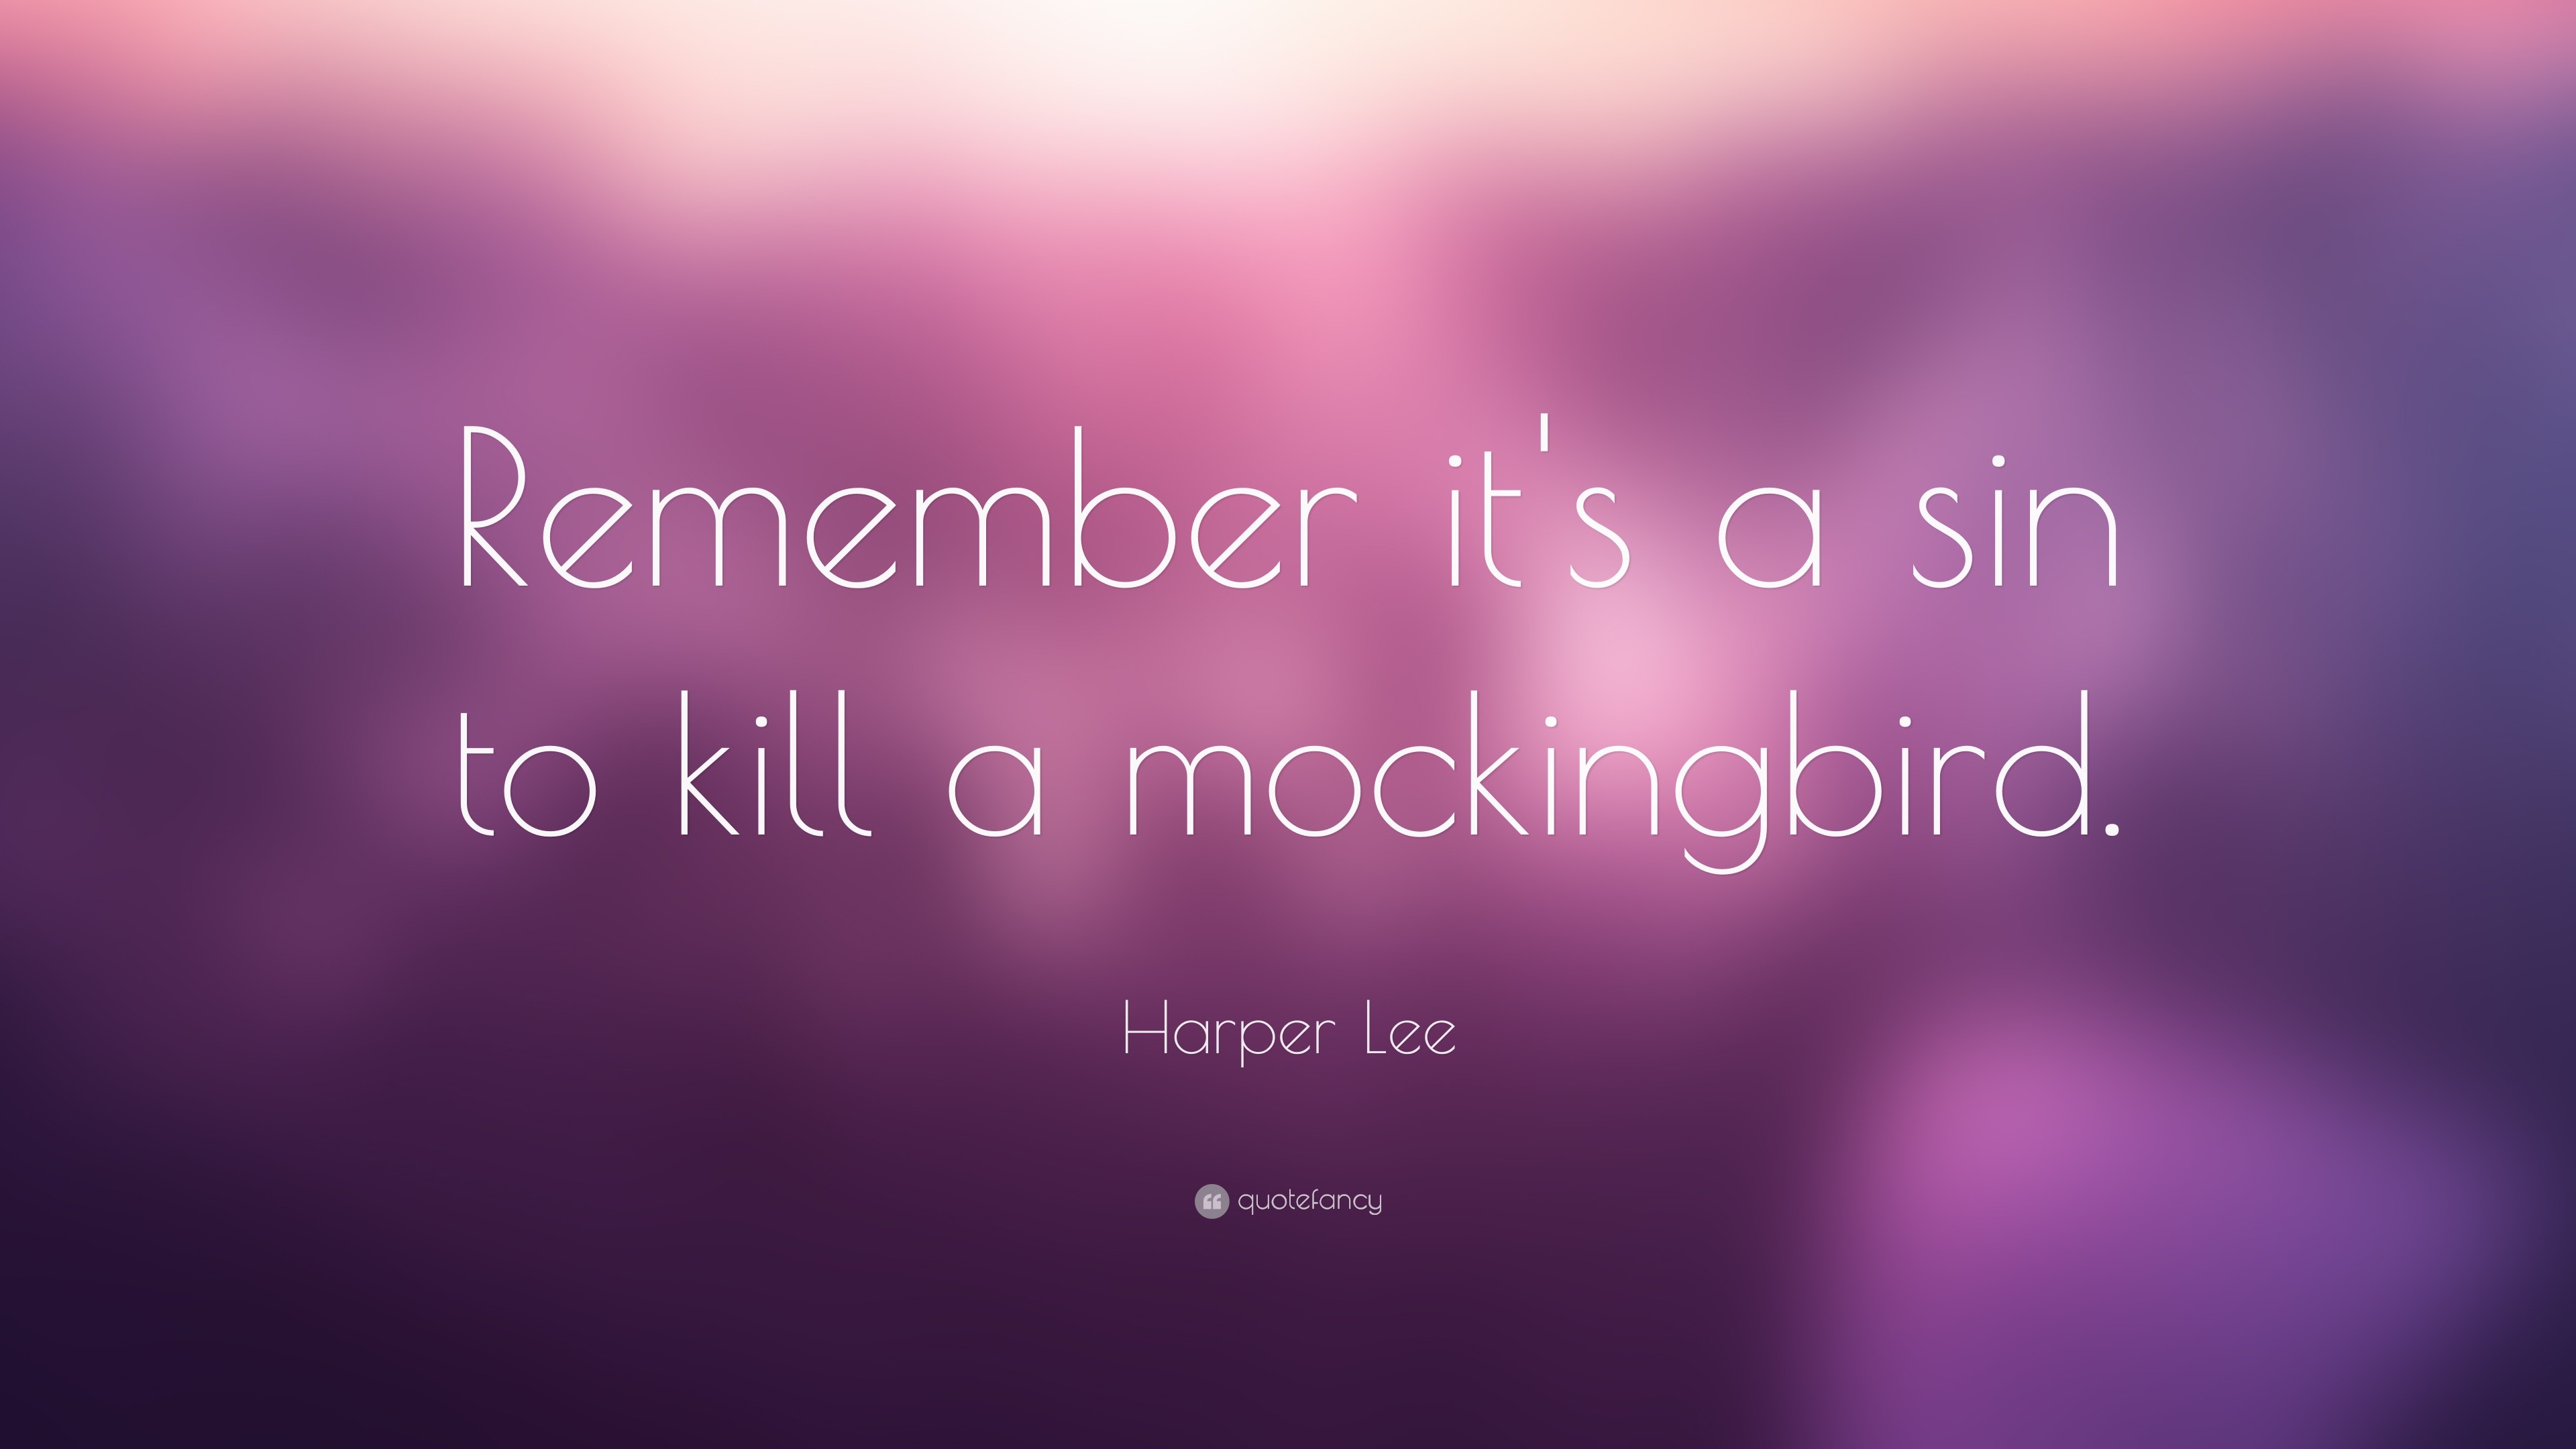 3840x2160 Harper Lee Quote: “Remember it's a sin to kill a mockingbird.”